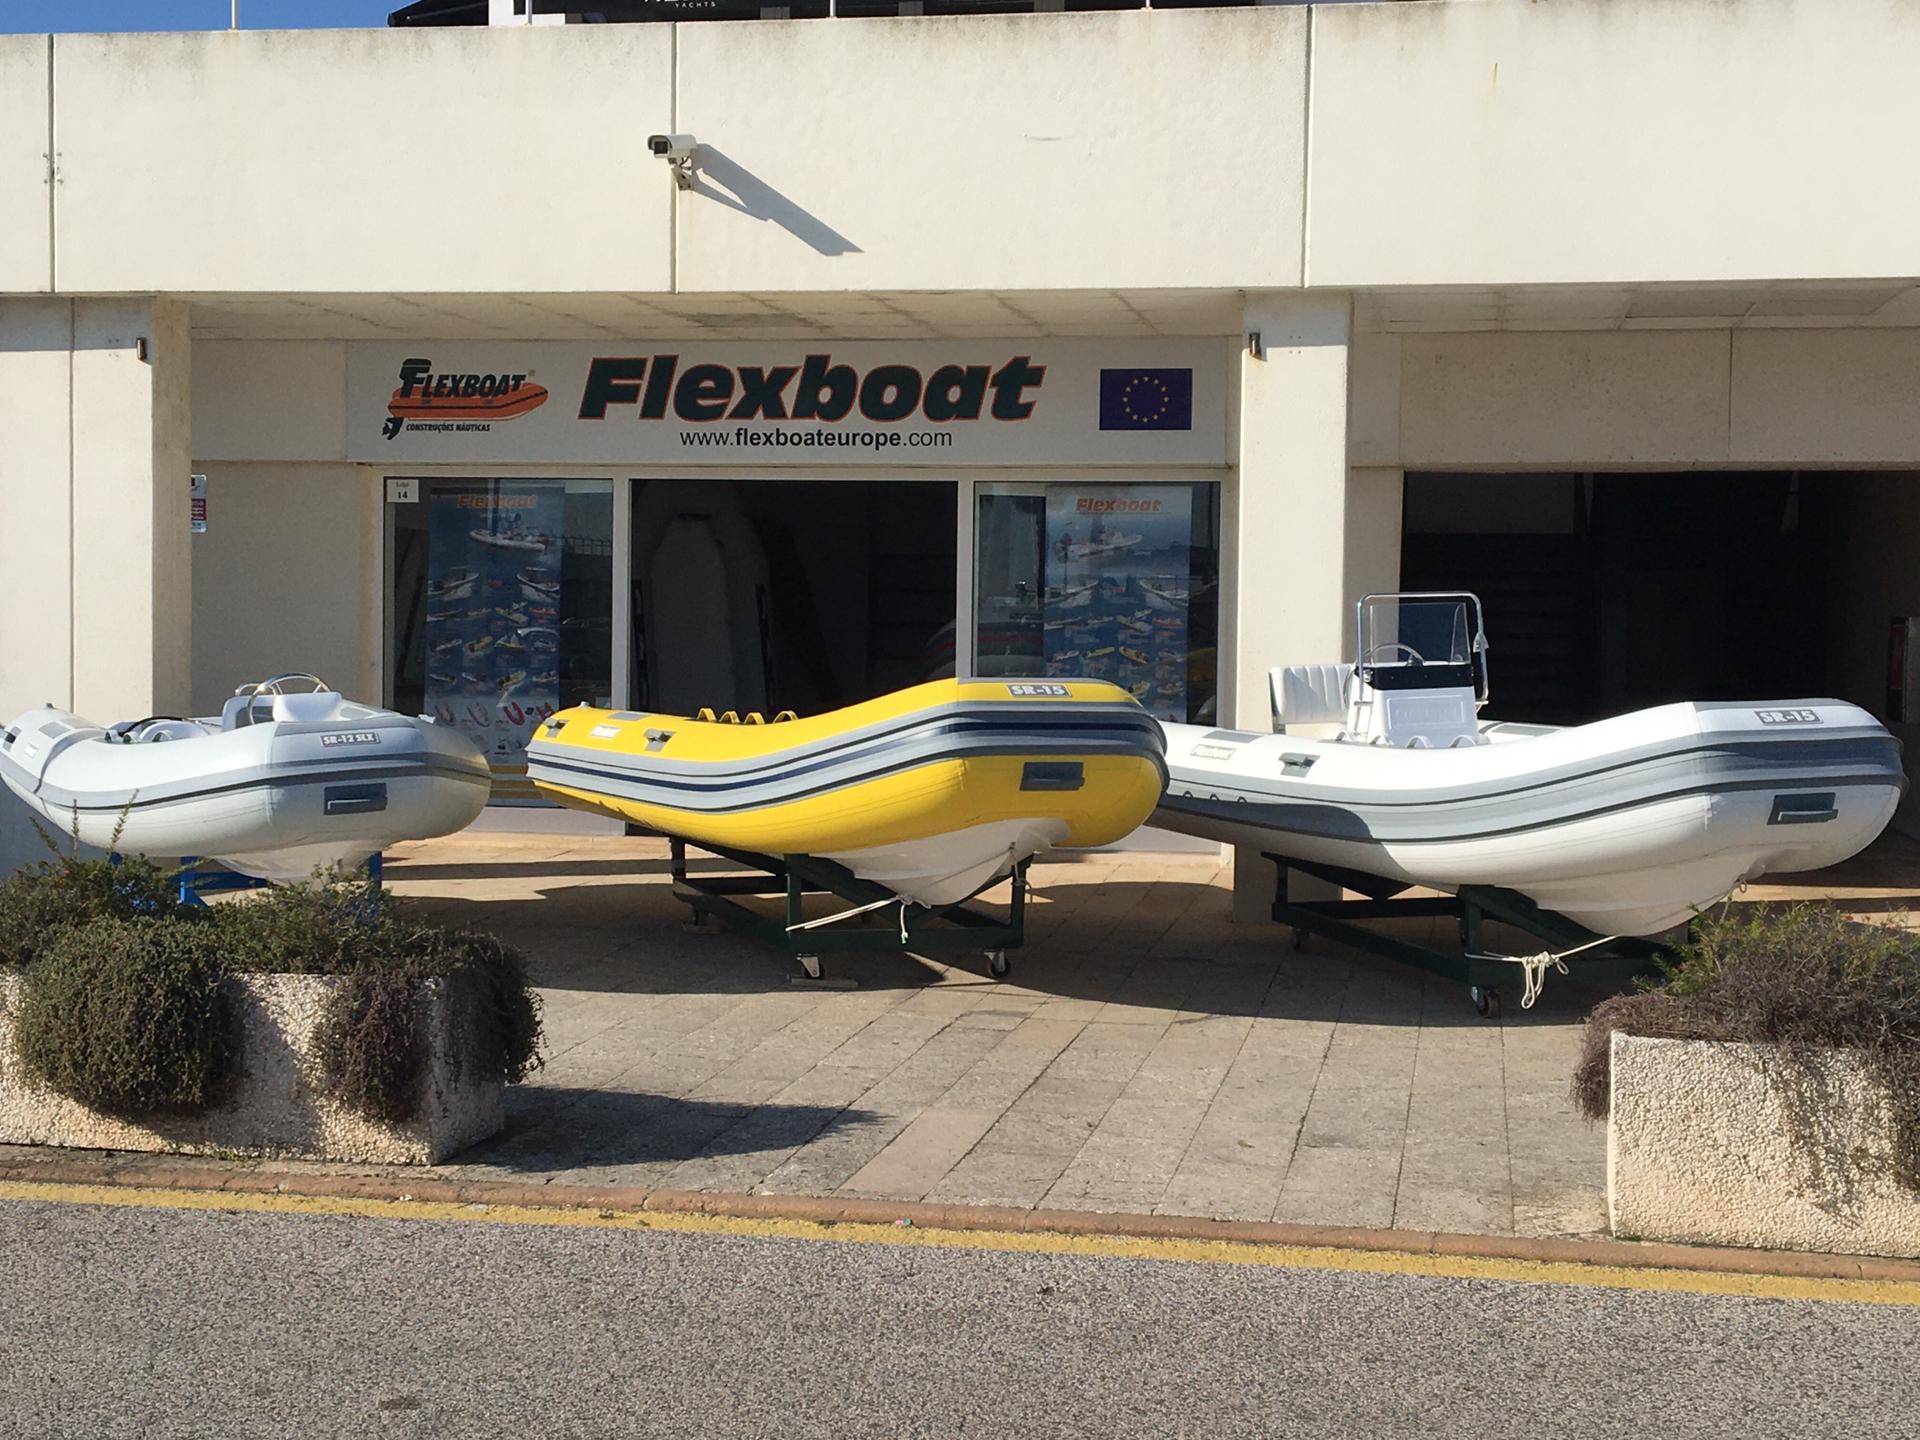 Flexboat Europa - boat shopping